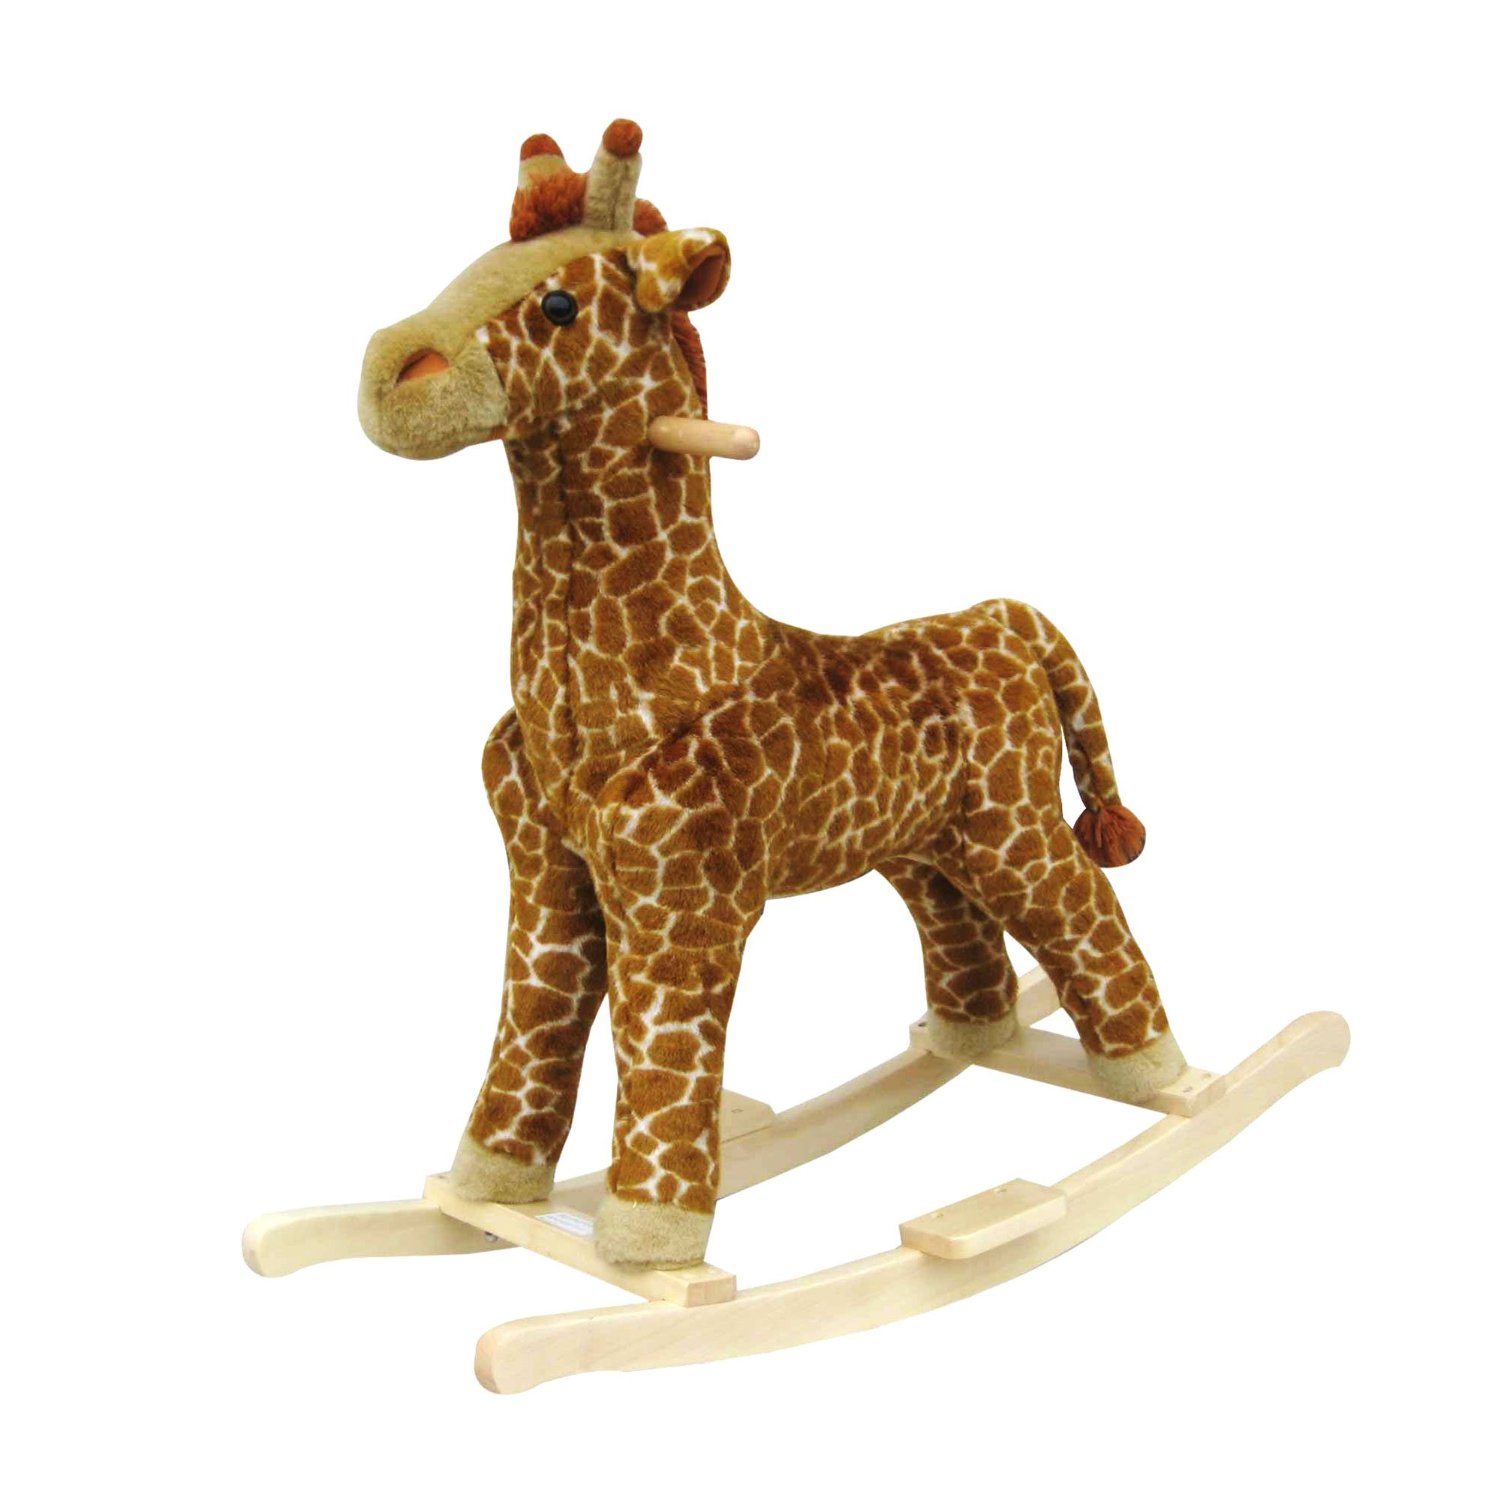 Happy Trails Giraffe Plush Rocking Animal Only $49.99 Shipped (Reg. $159.99)